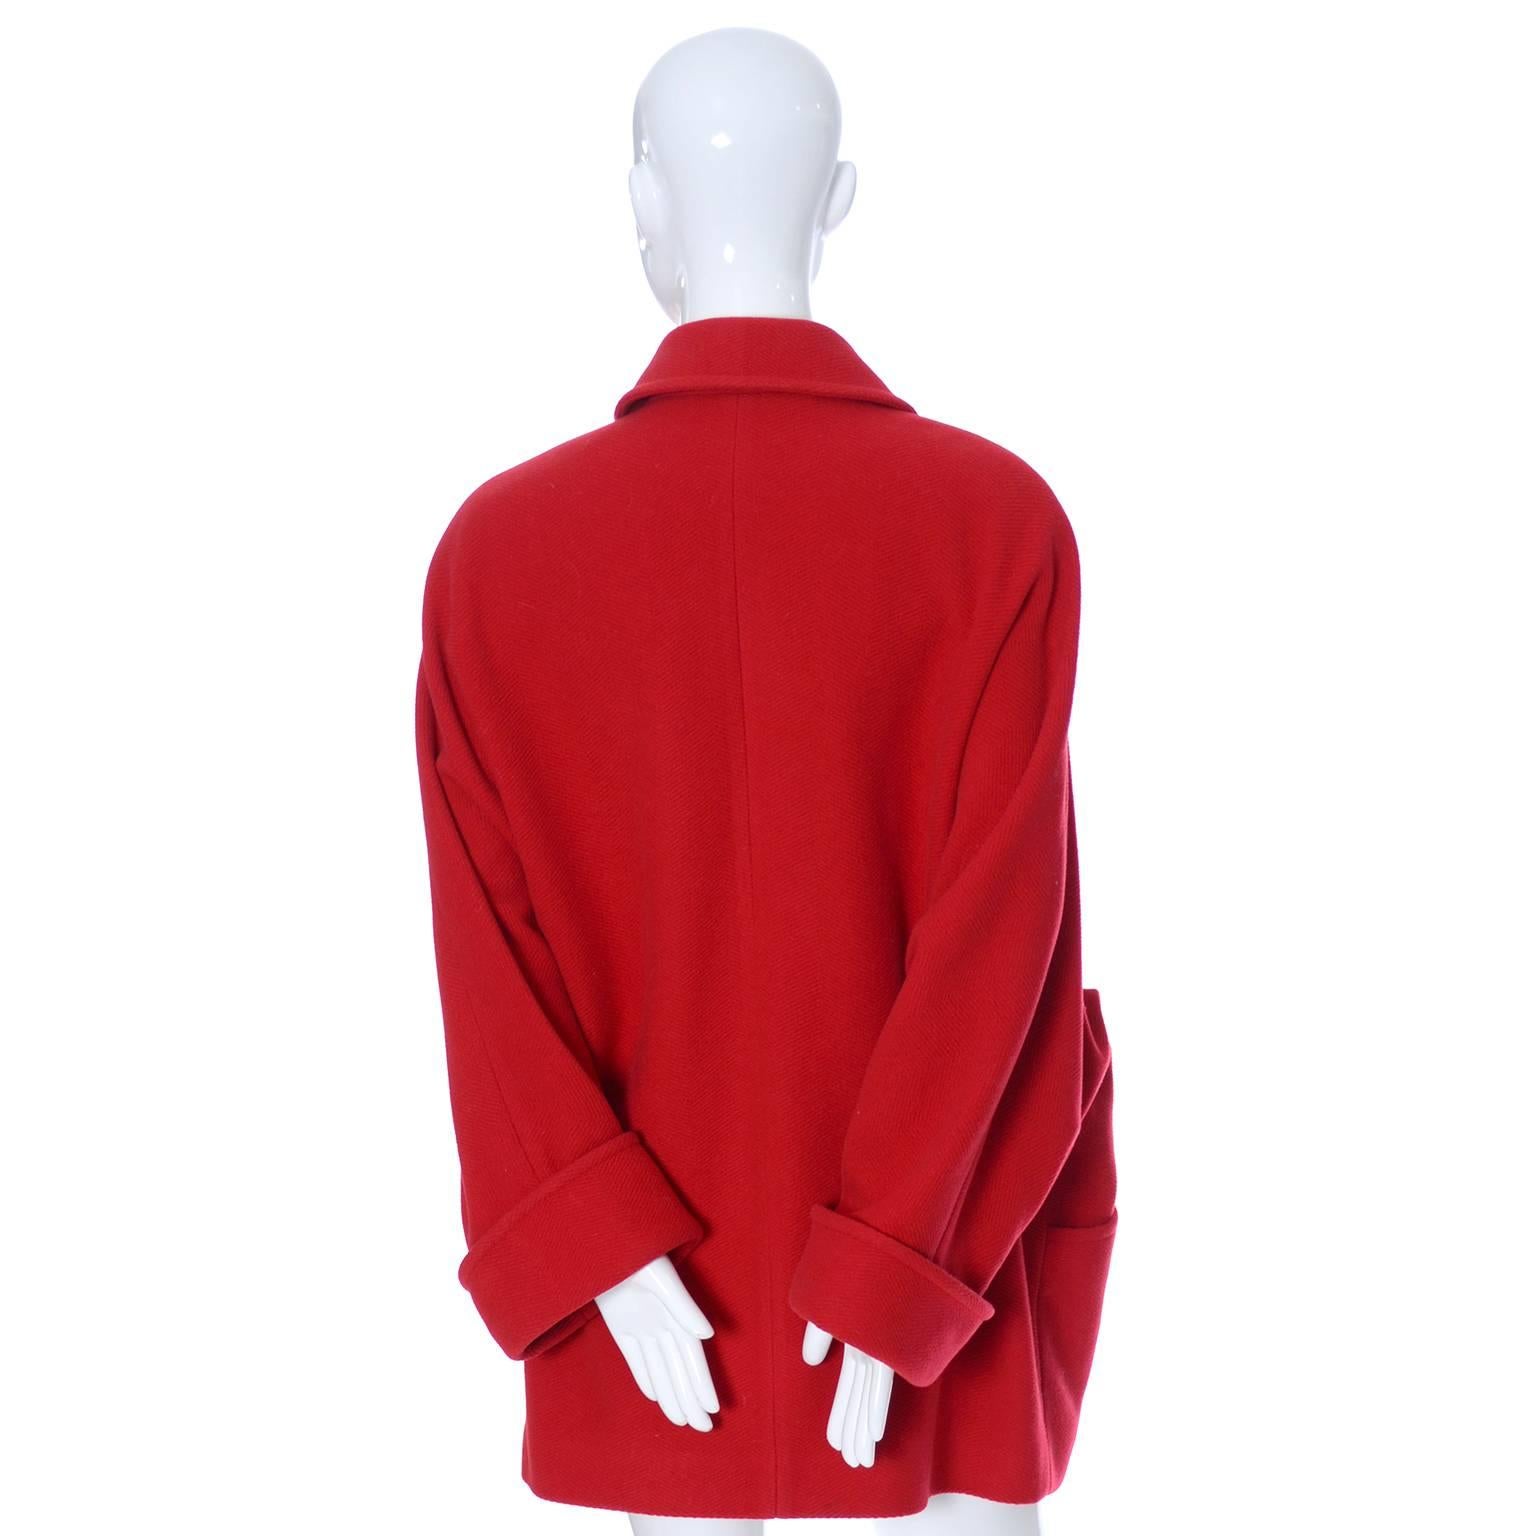 Guy Laroche Boutique 1980s Vintage Coat in Cherry Red Wool W Dolman Sleeves 1